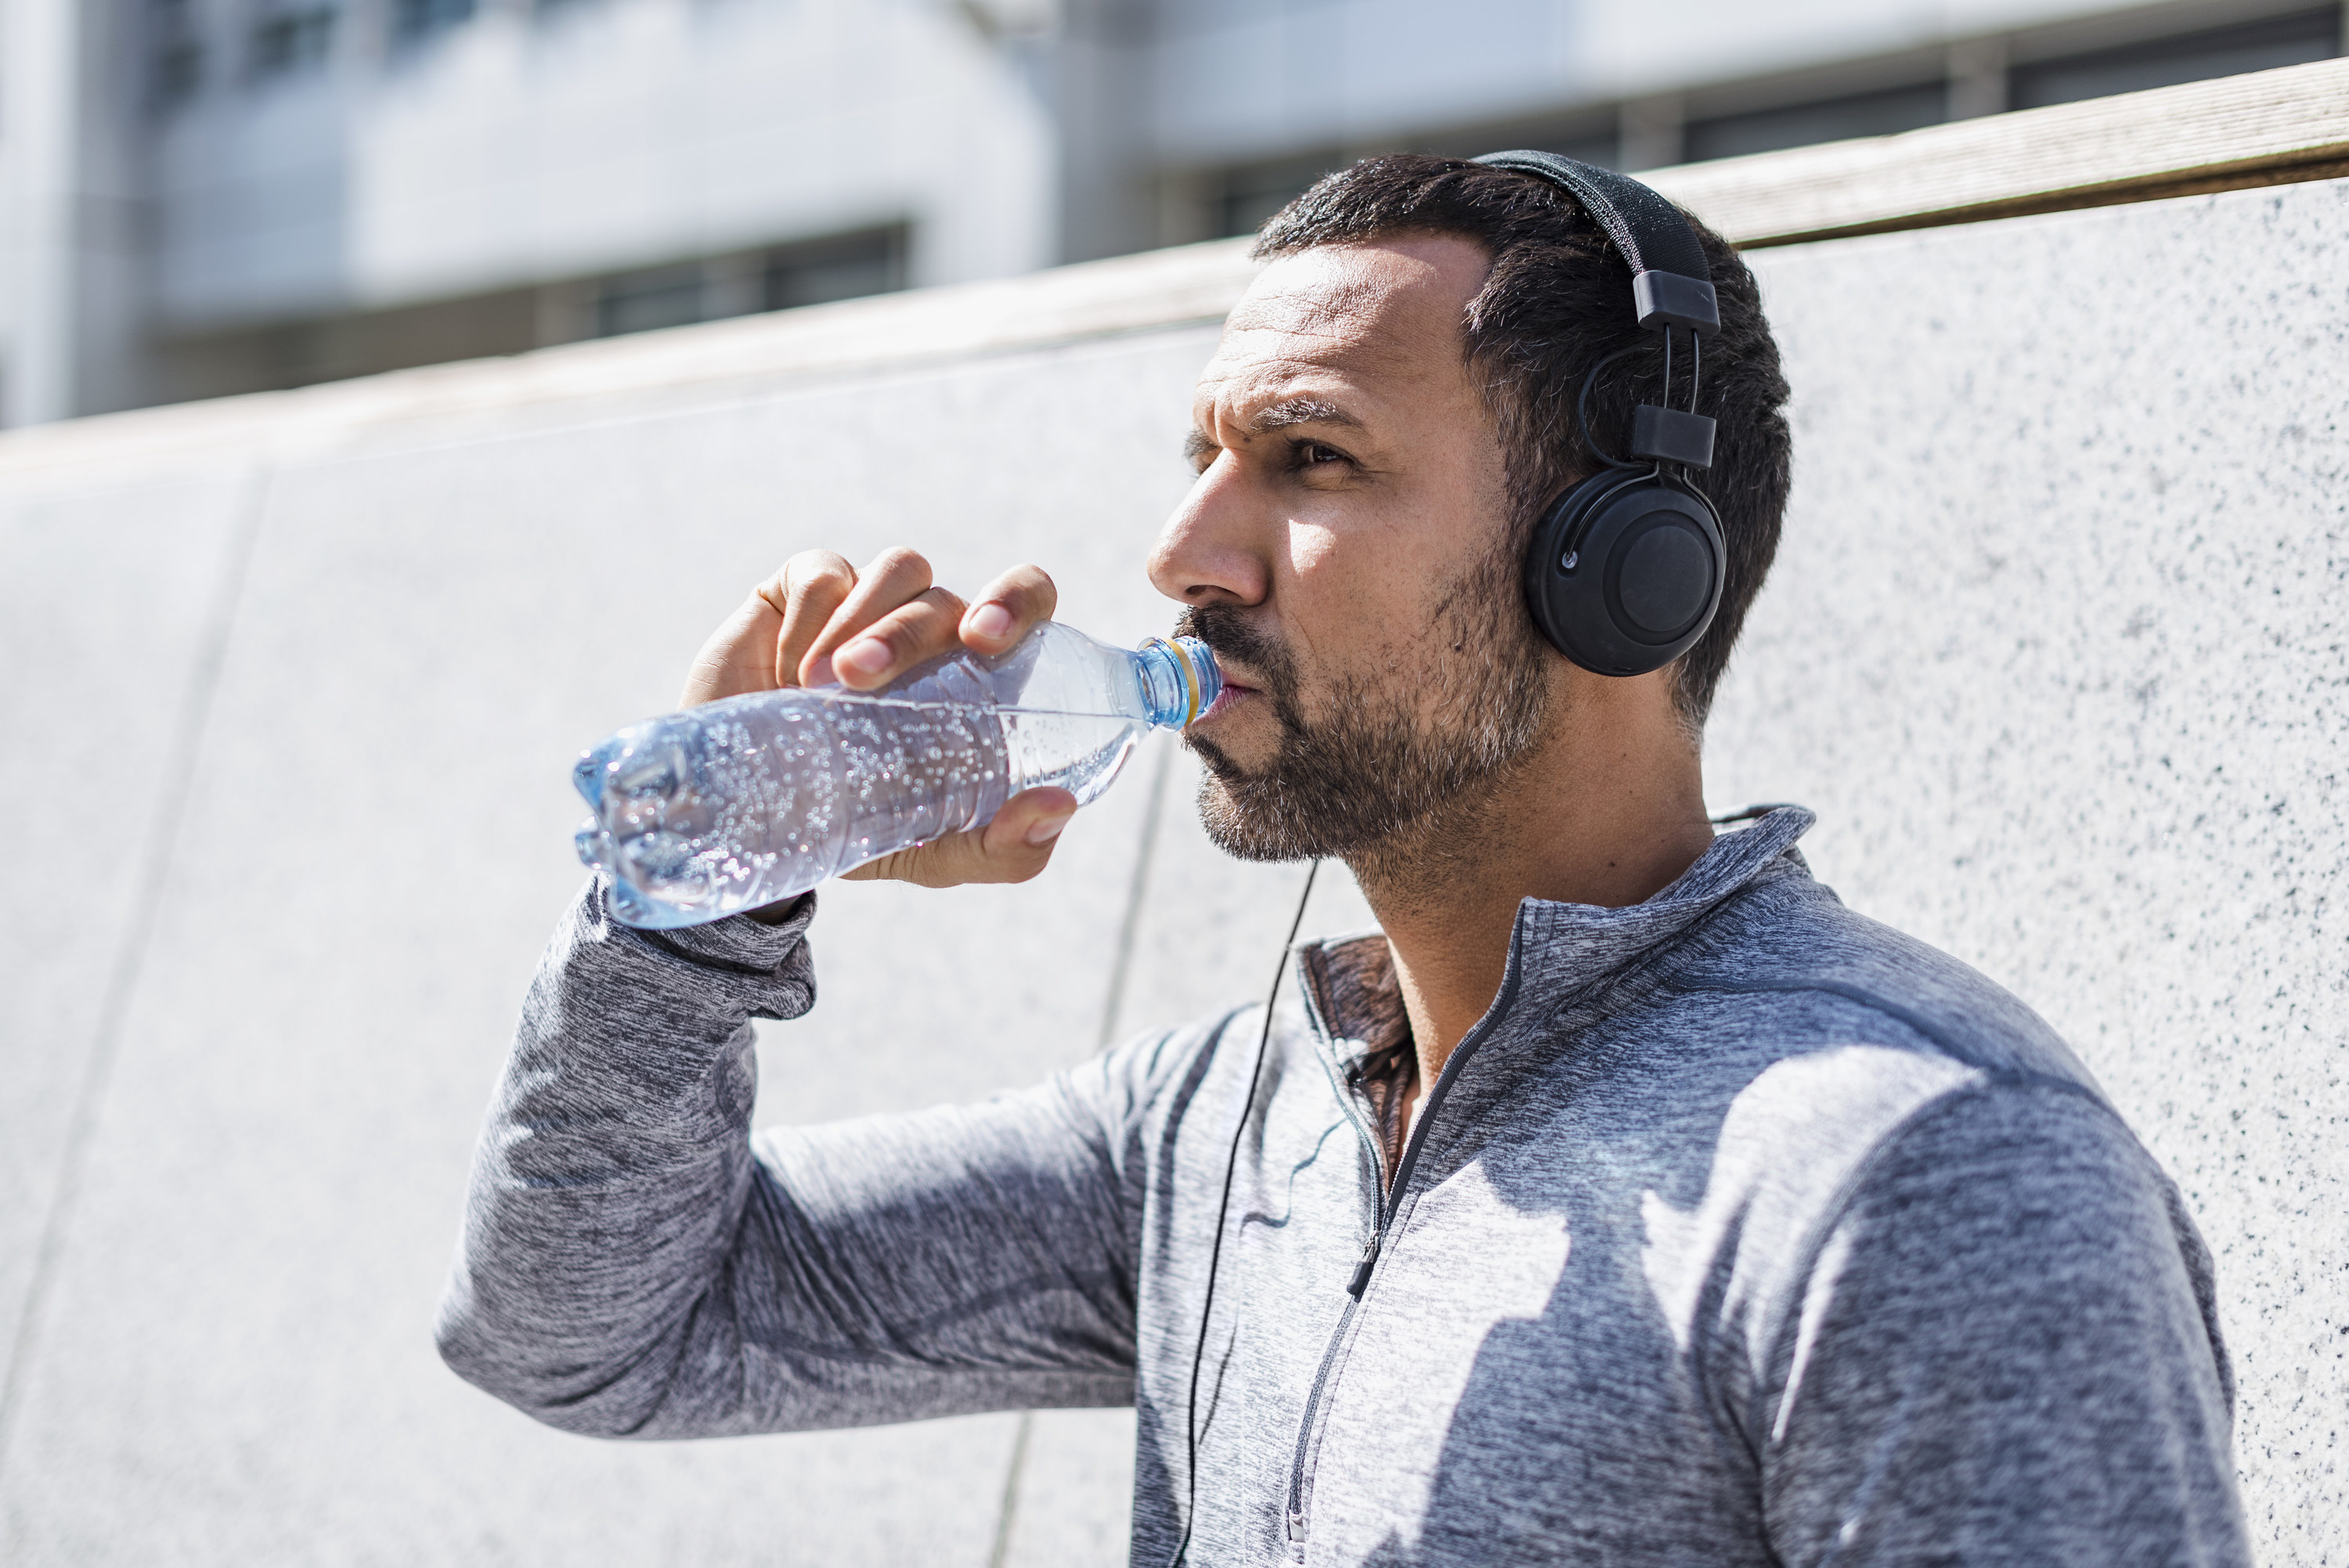 A man wearing headphones drinks from a water bottle